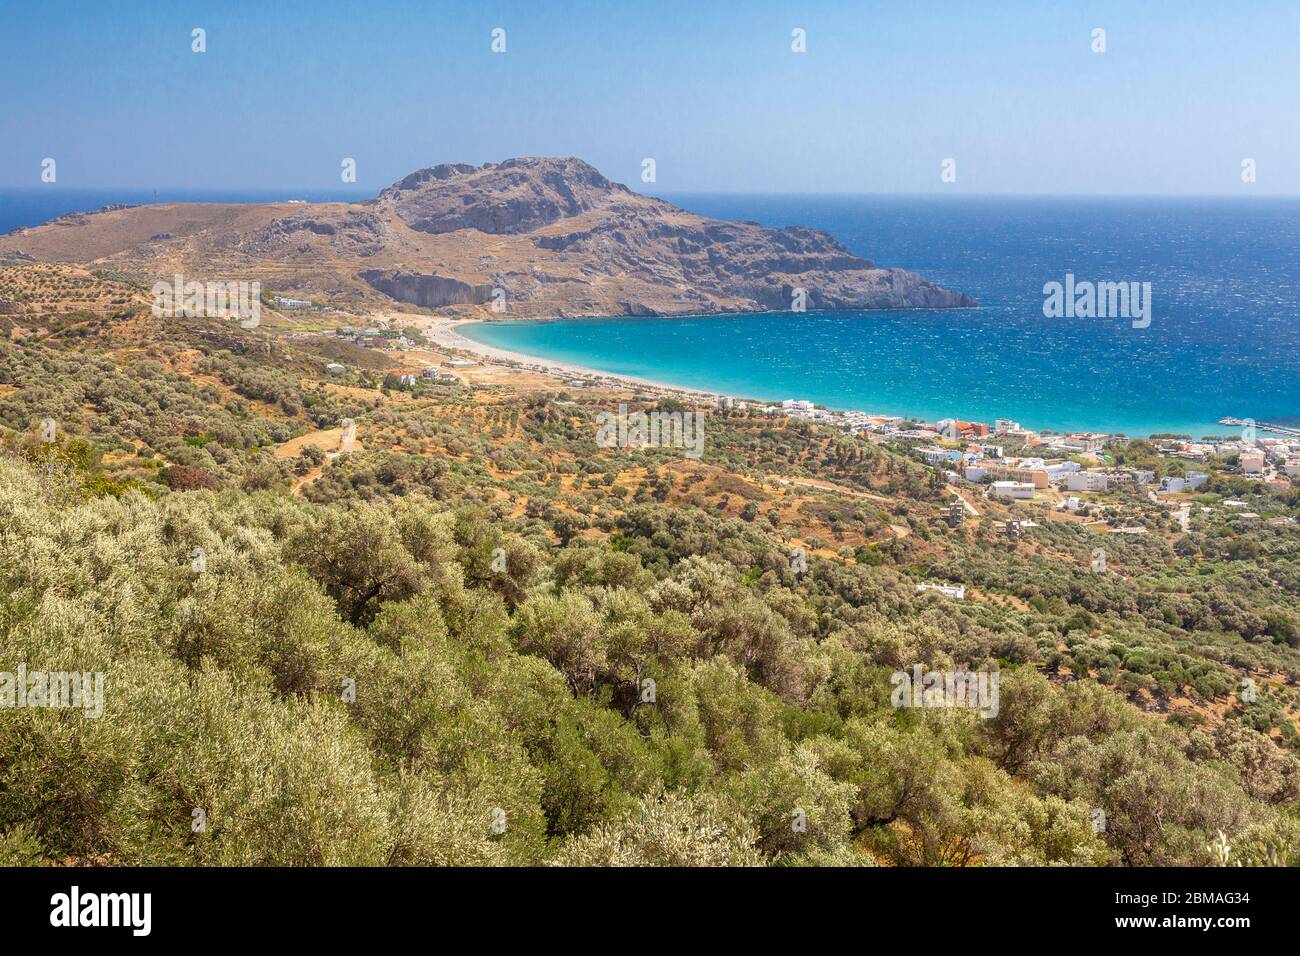 View over treetops towards a beach and headland, Plakias, Crete, Greece Stock Photo